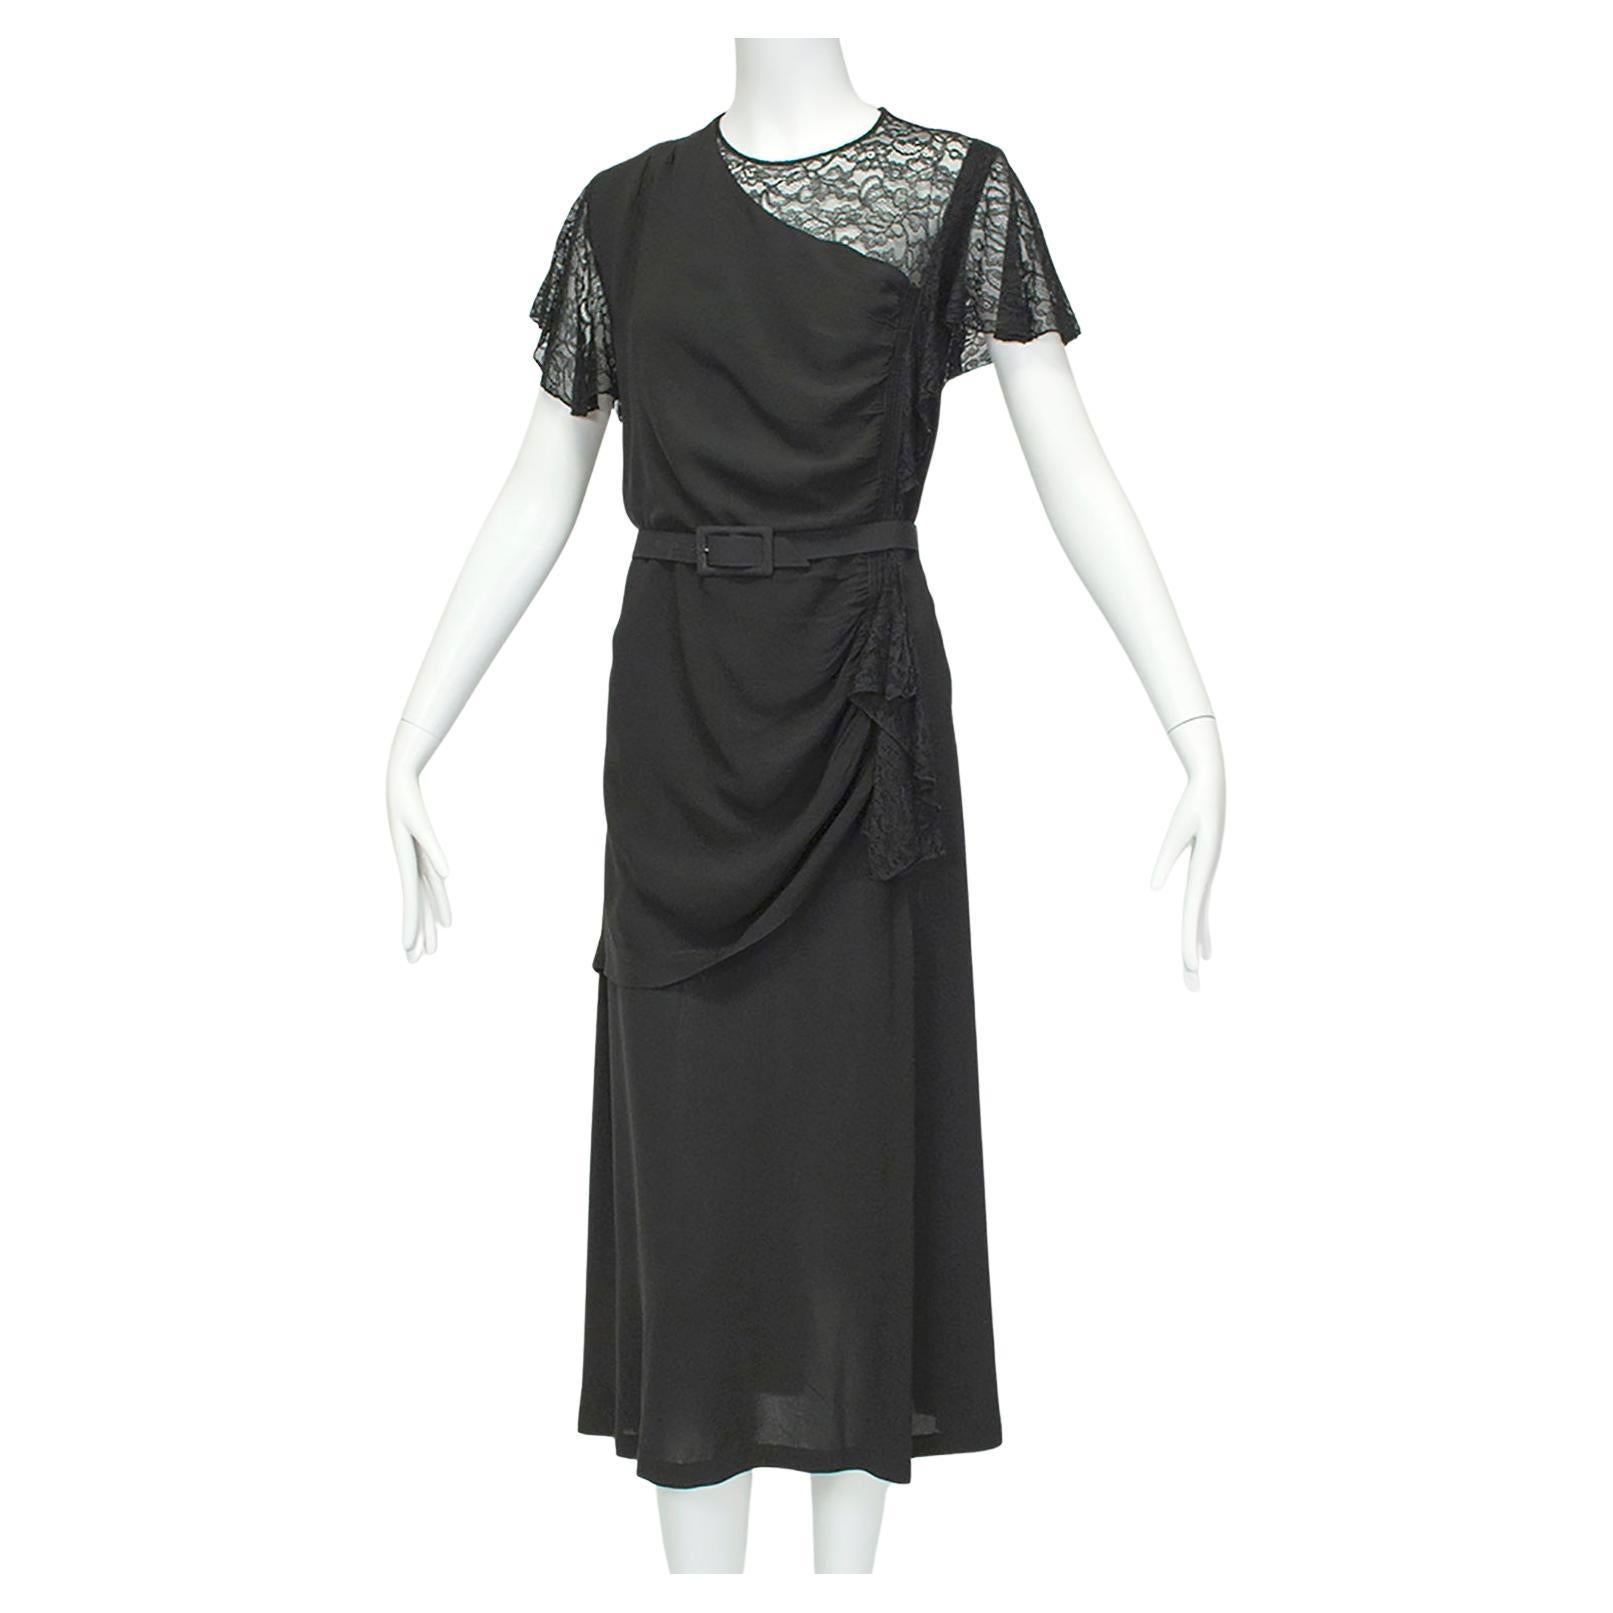 Ben Reig Black Draped Illusion-Shoulder Keyhole Cocktail Dress – M, 1930s For Sale